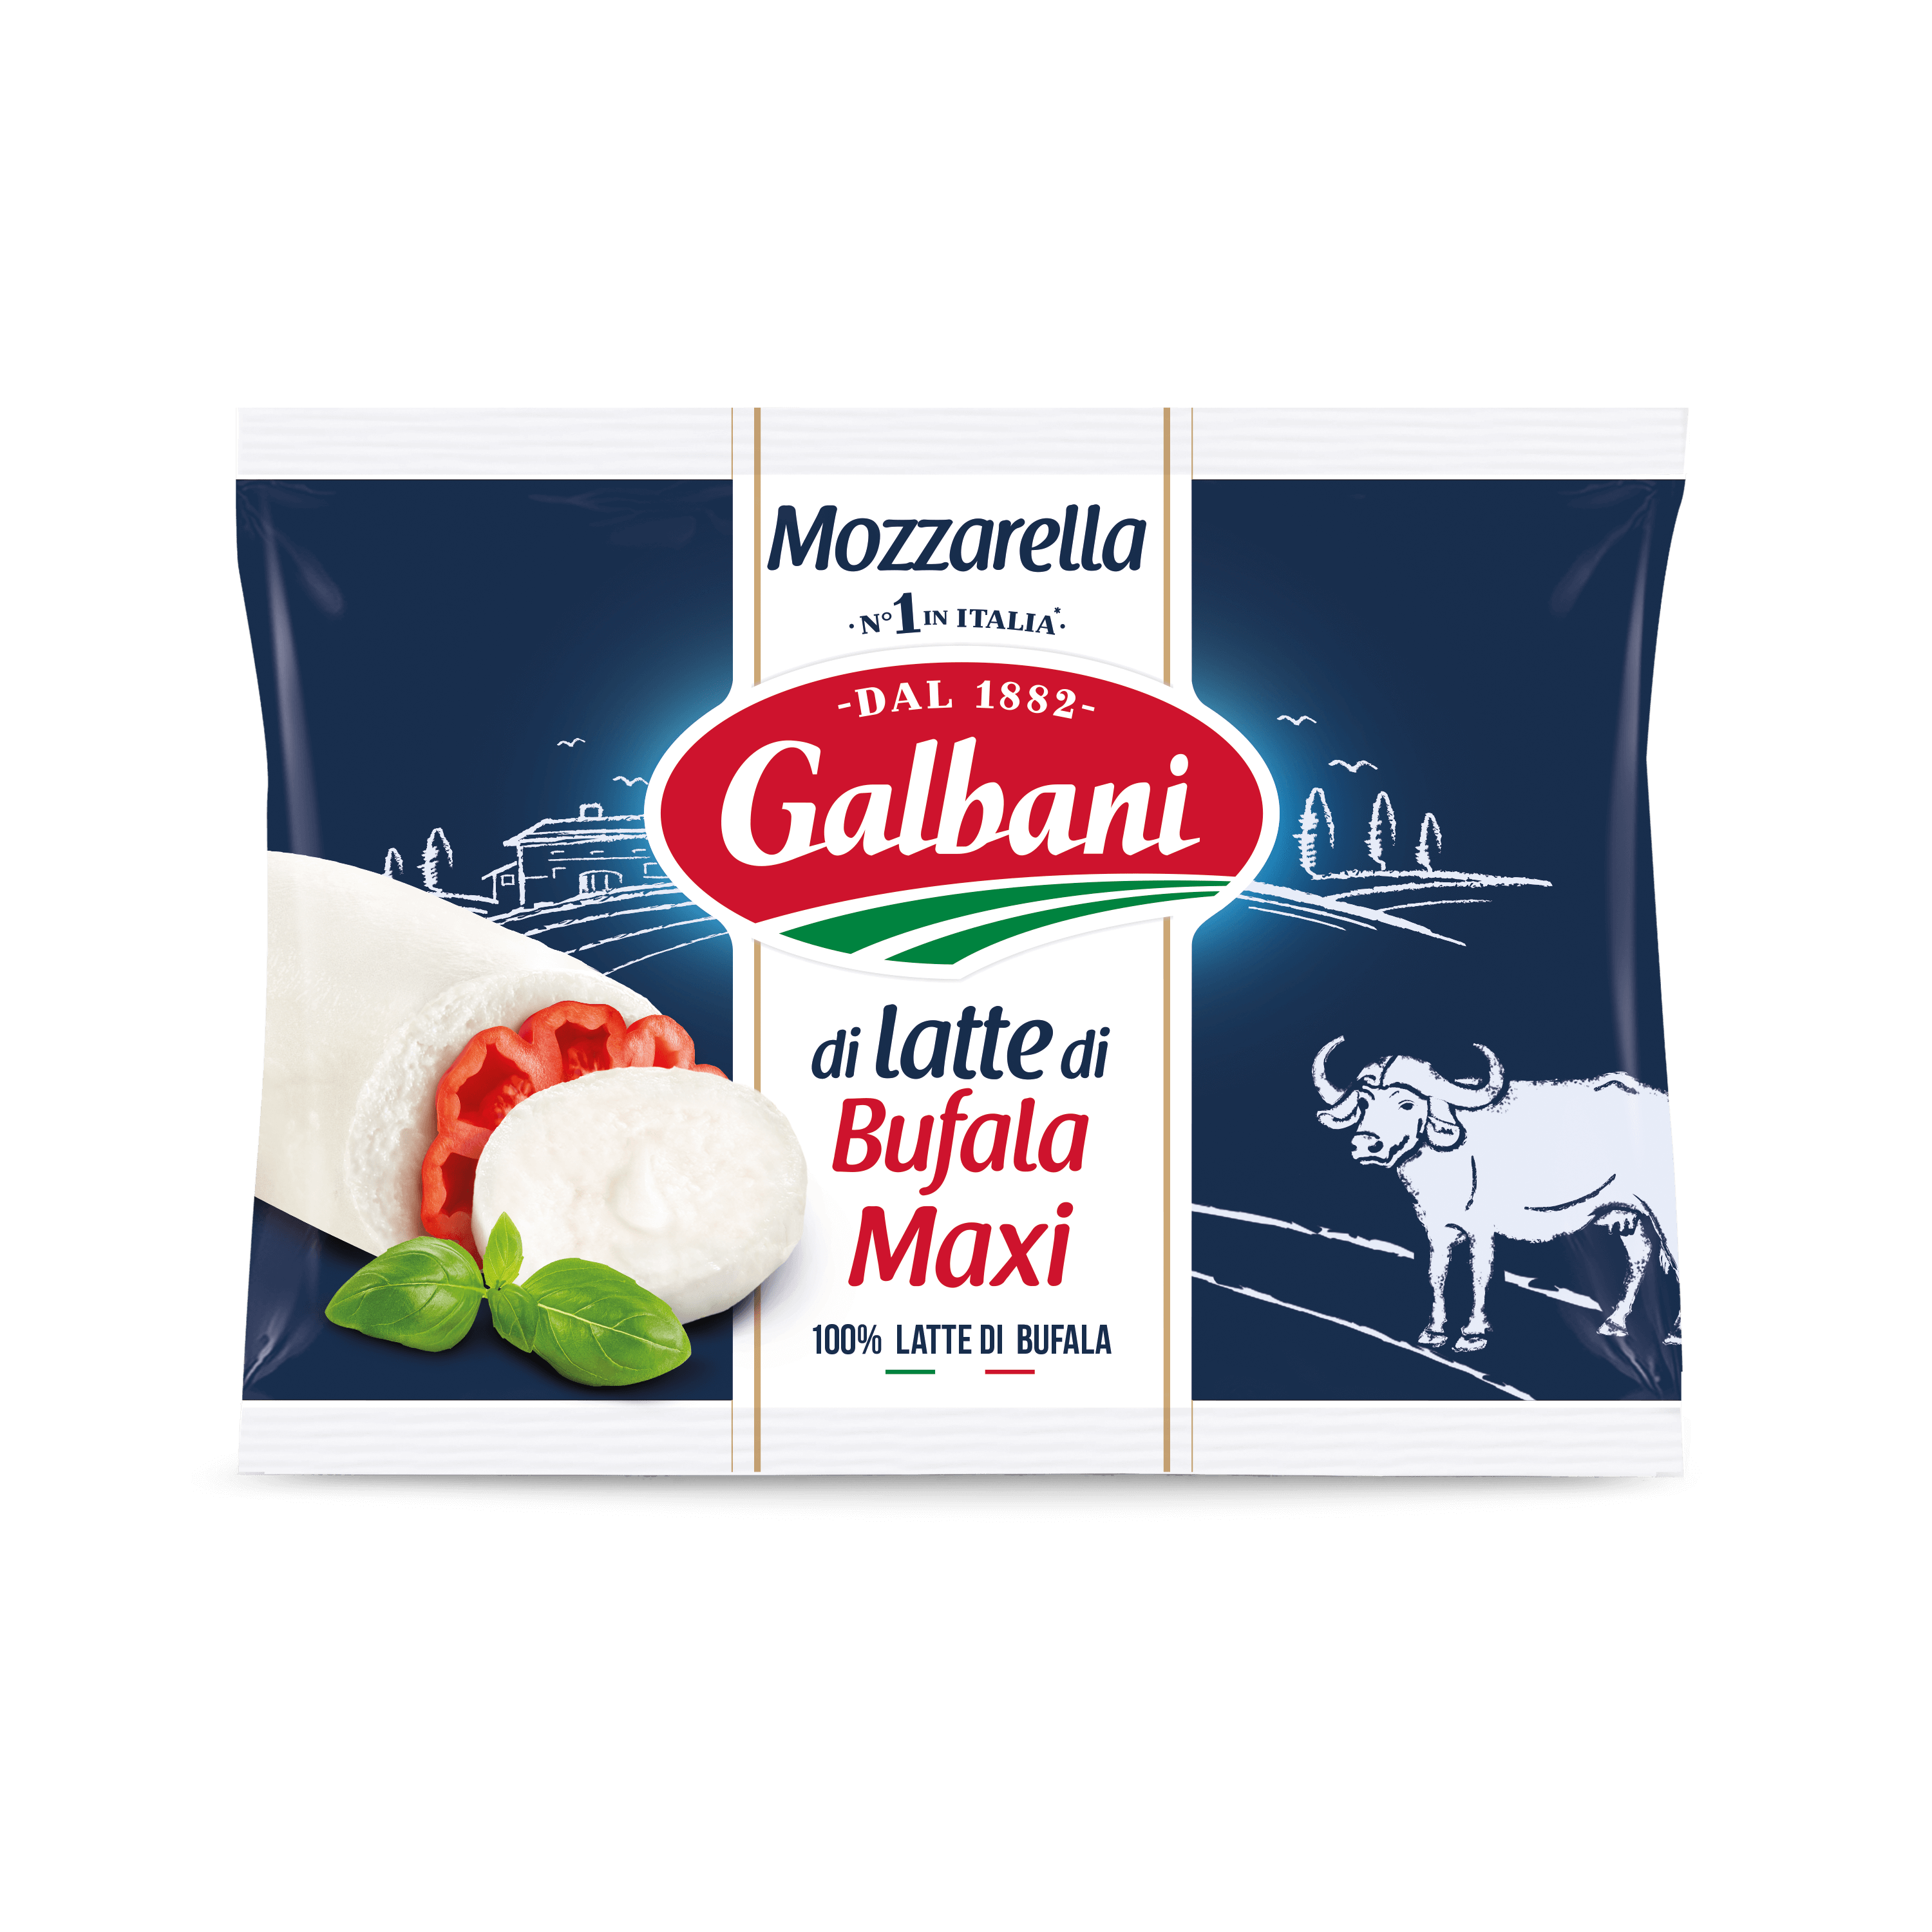 Galbani Mozzarella di Latte di Bufala Maxi 200g - Galbani